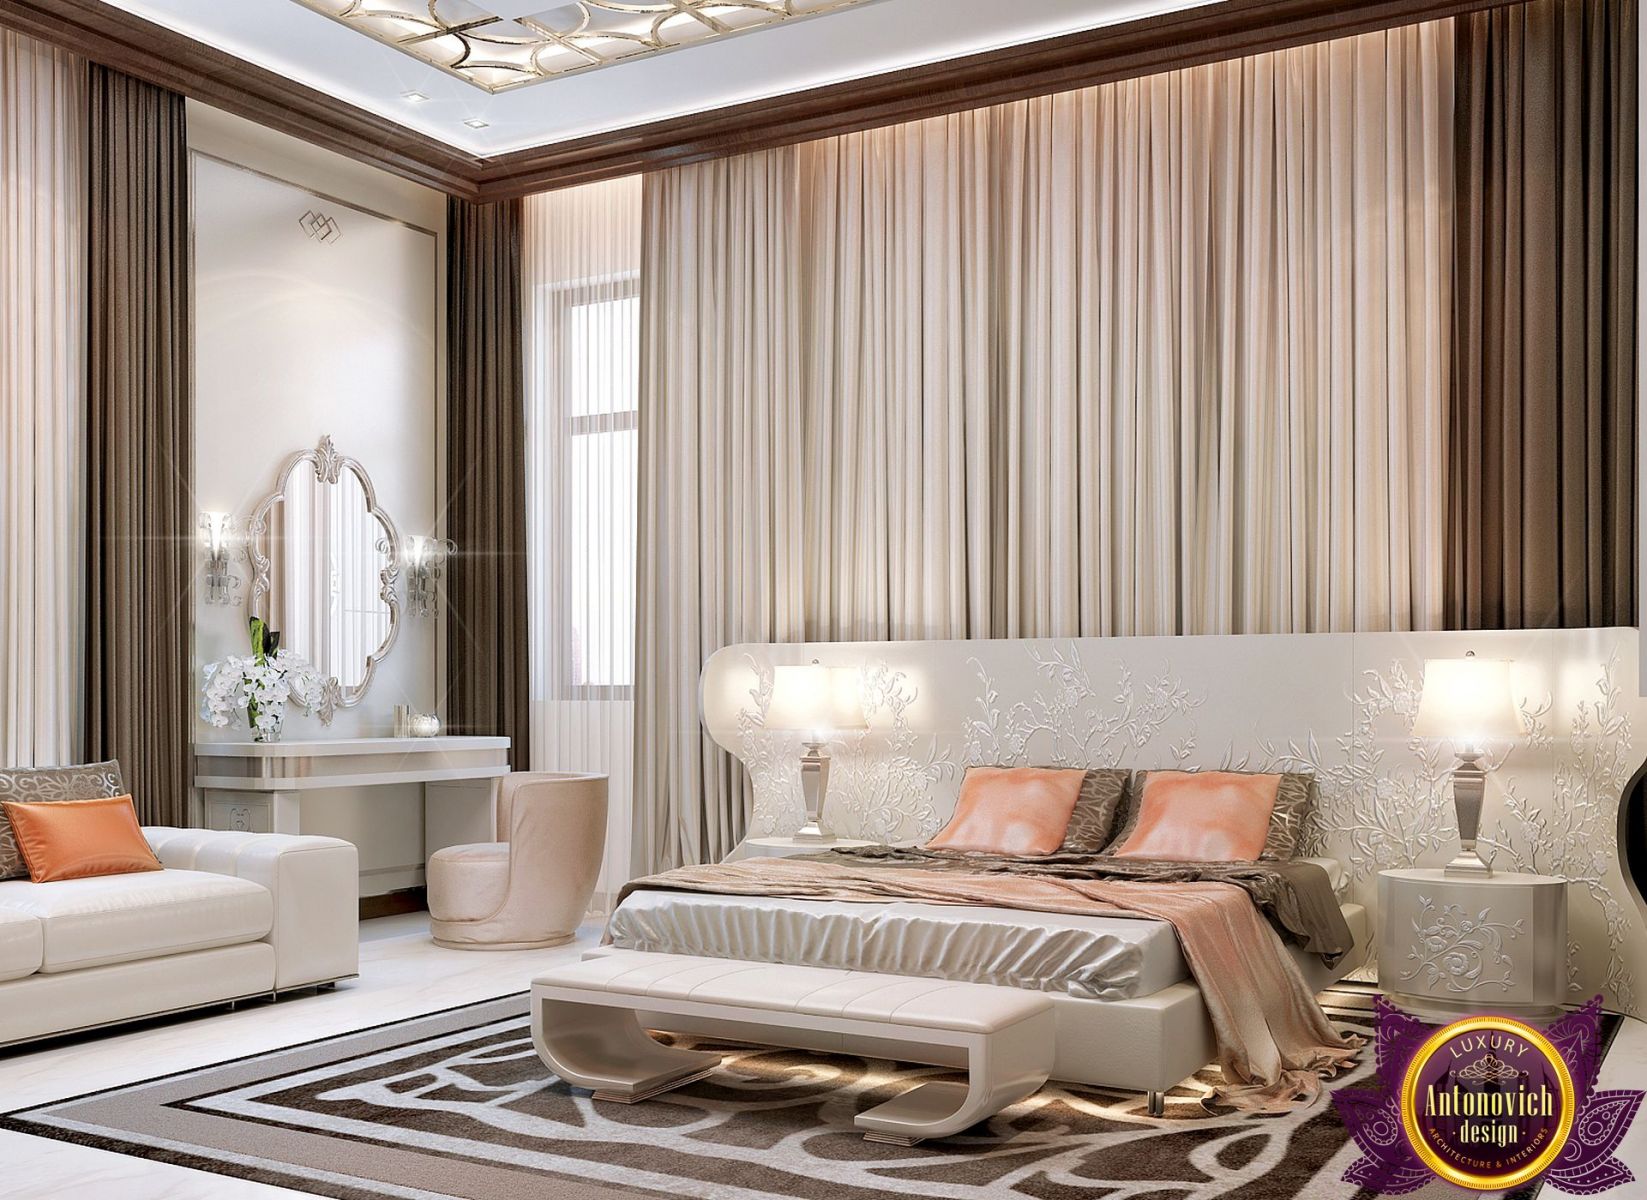 Modern minimalist bedroom design with neutral tones